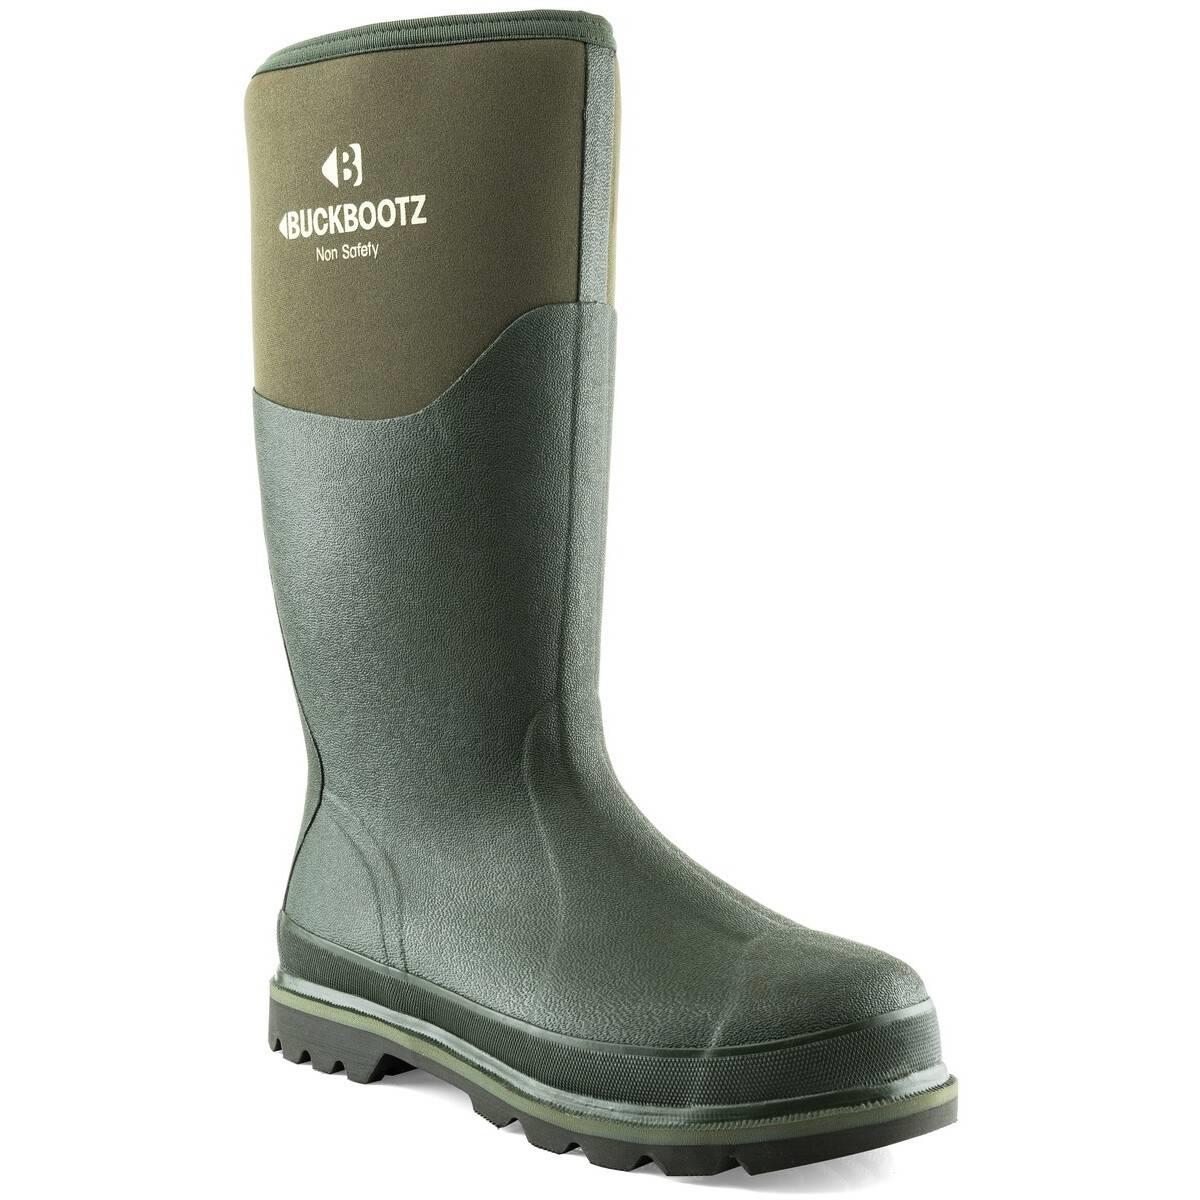 Buckbootz green non-safety waterproof rubber wellington boot #BBZ5020